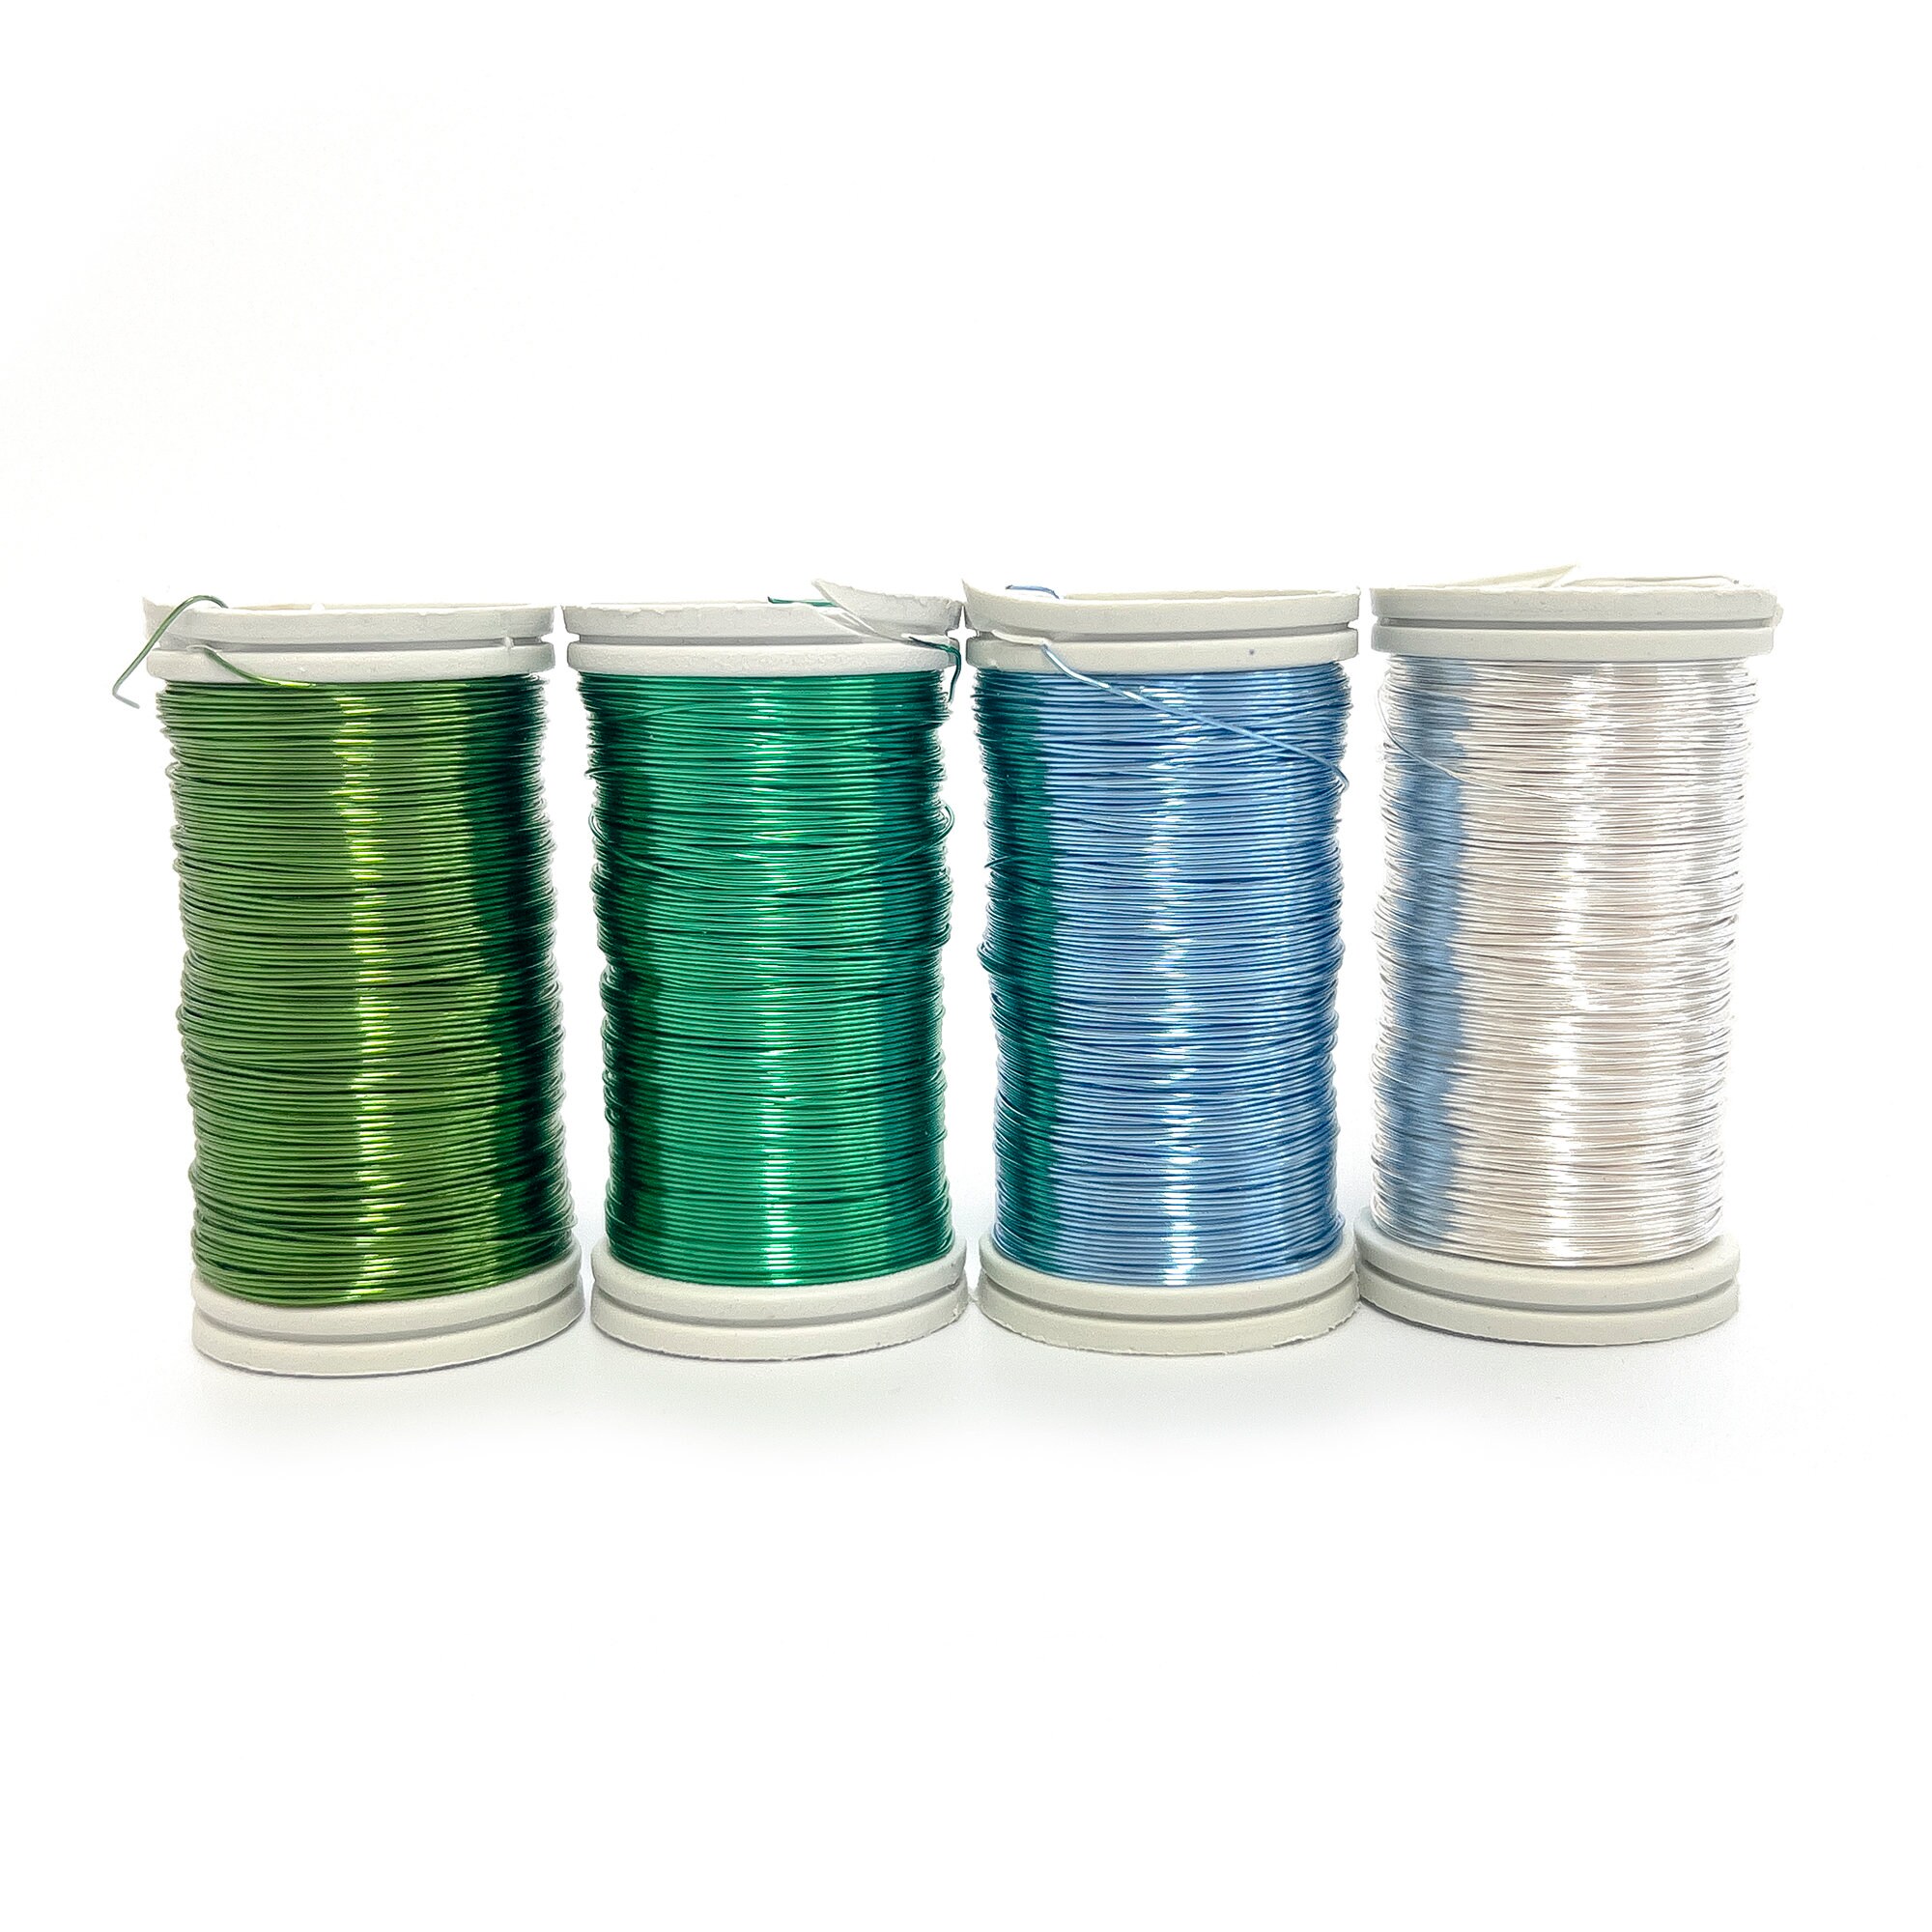 Premium Craft Wire, jewelry wire, Extra long spools - Yooladesign